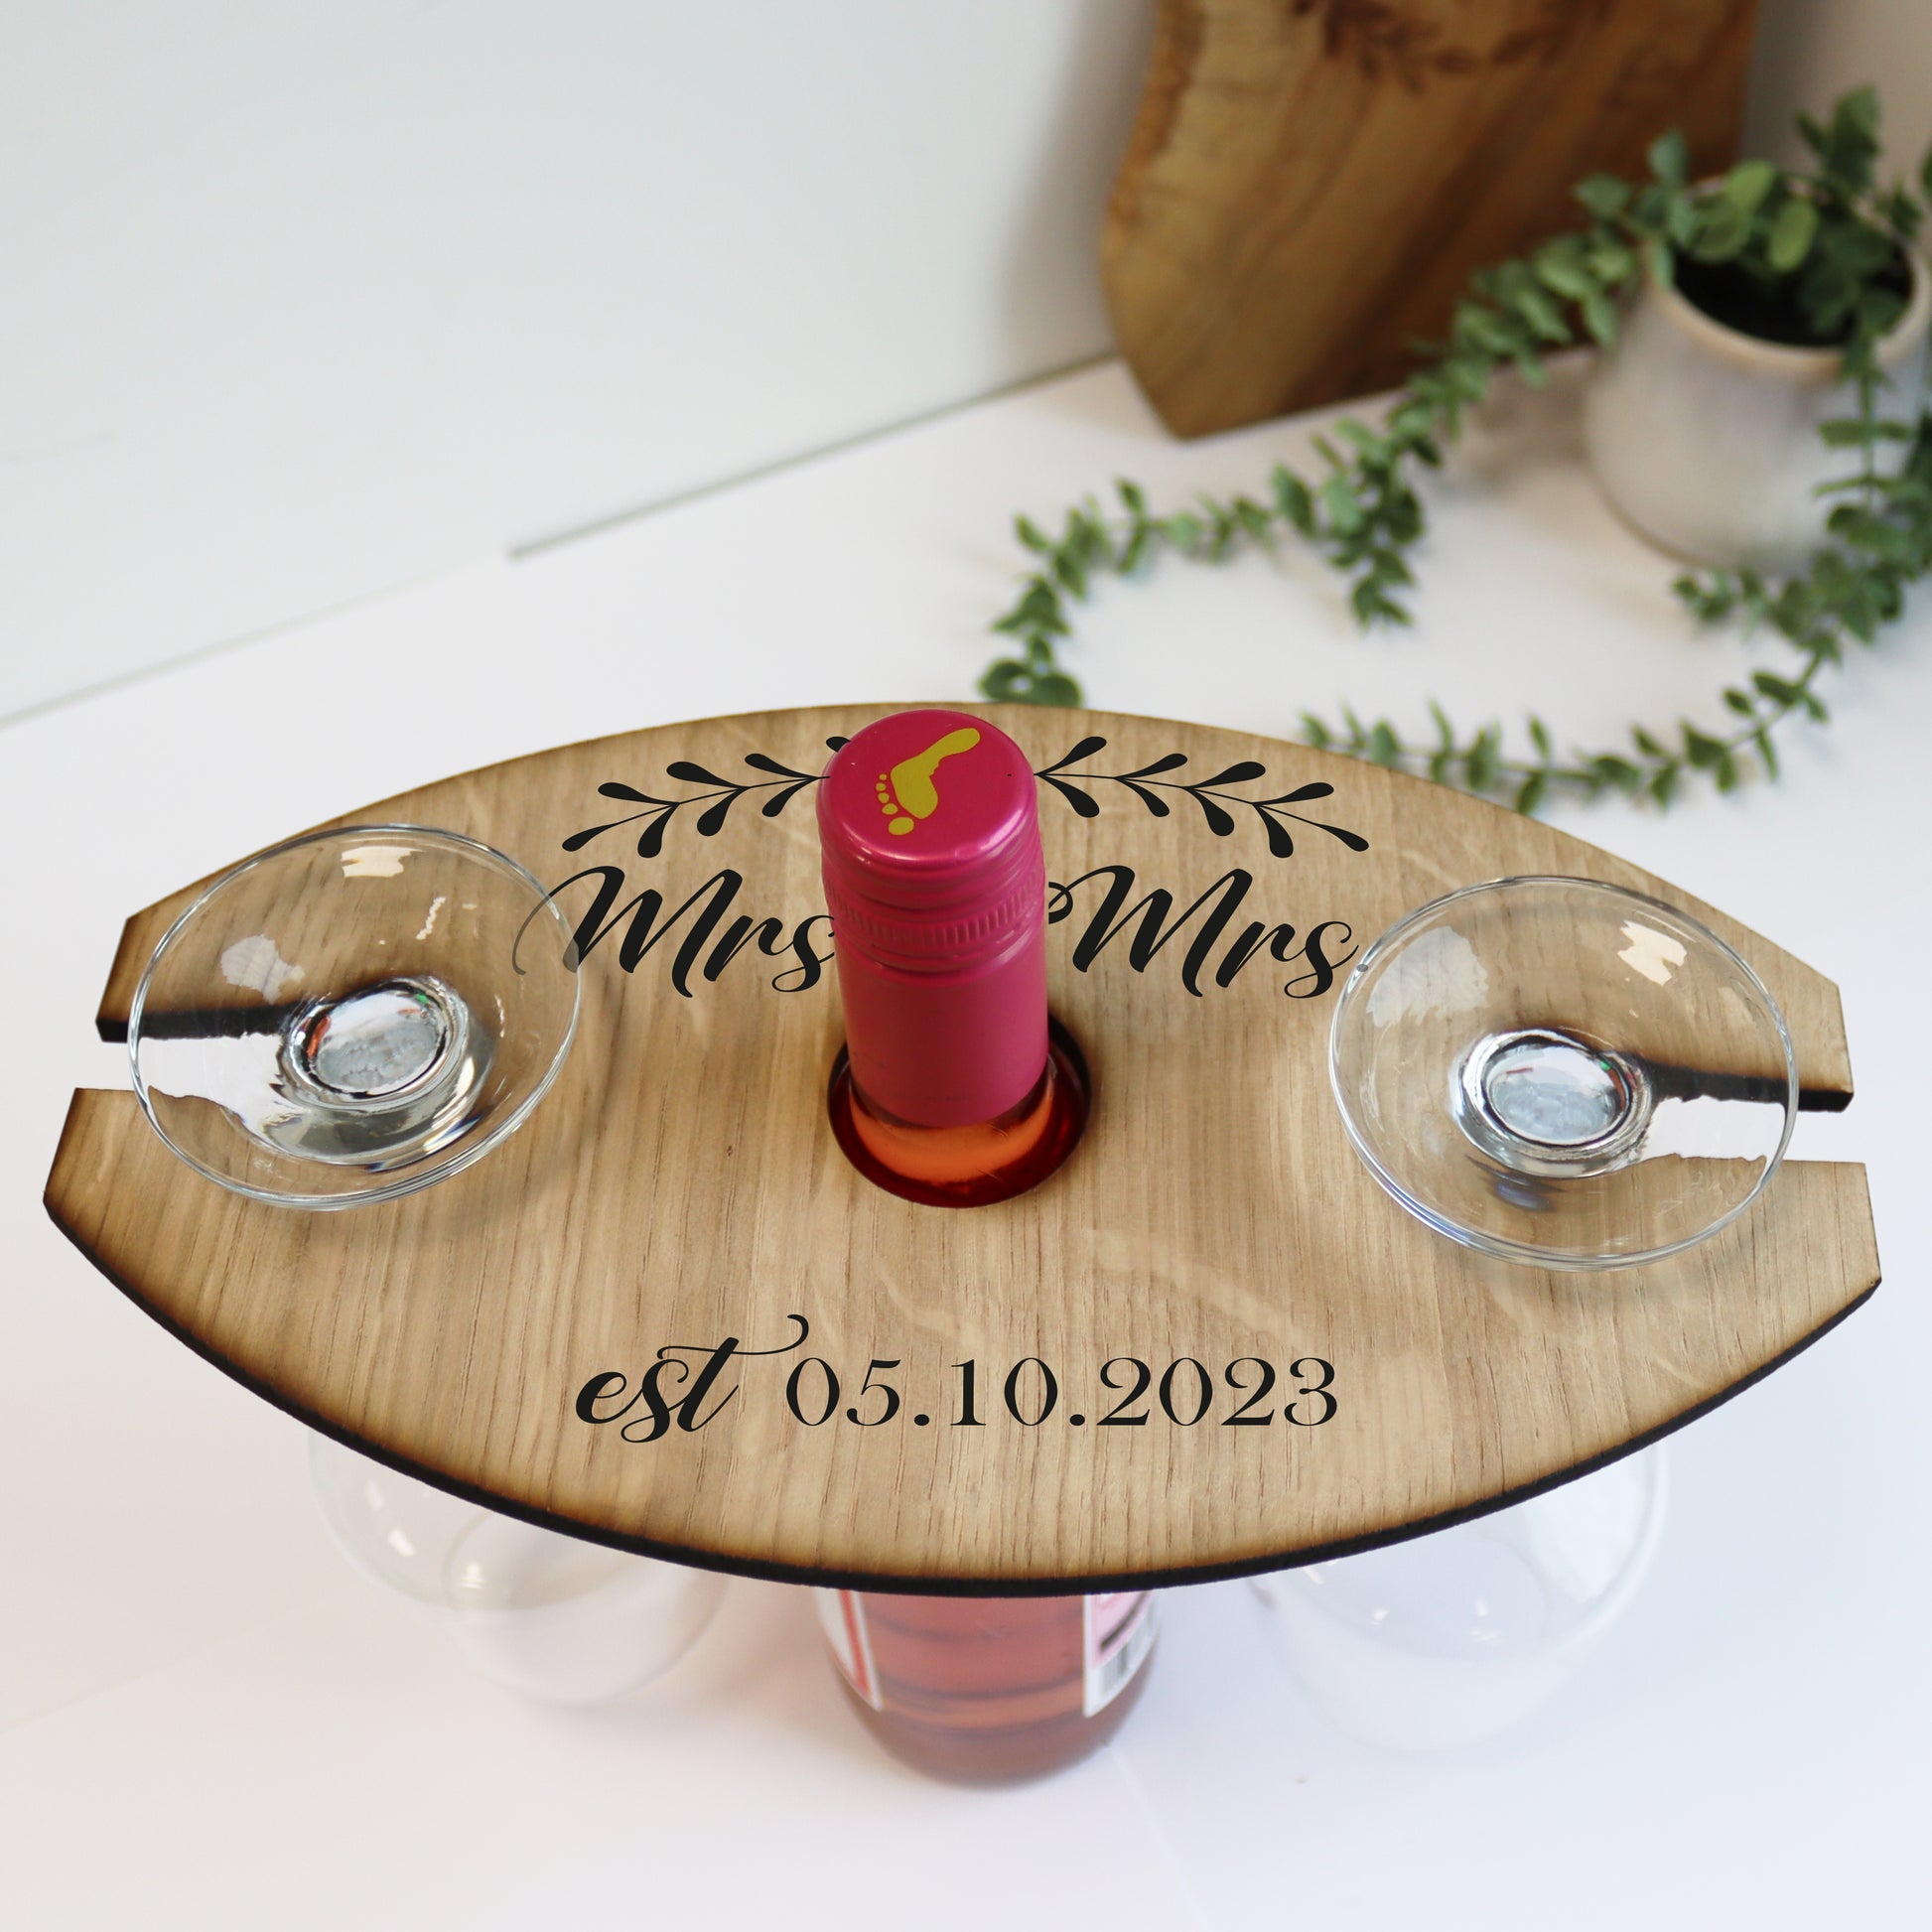 mrs and mrs wine personalised wedding gift wooden wine butler wine bottle holder and wine glass holder wedding gift